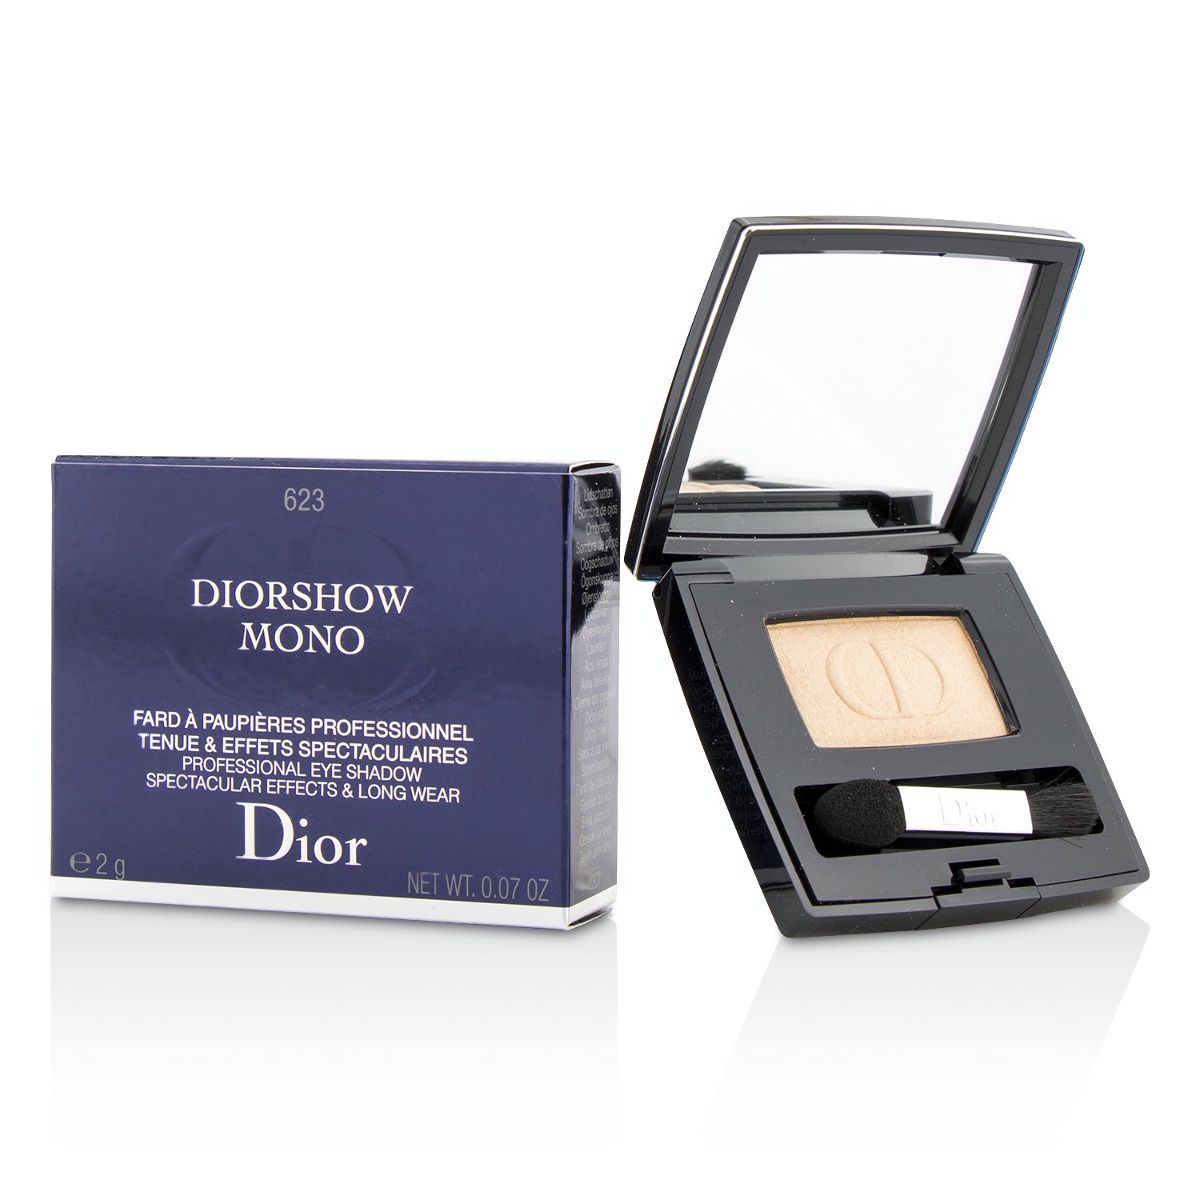 Diorshow Mono Professional Spectacular Effects  Long Wear Eyeshadow - # 623 Feeling Christian Dior Image